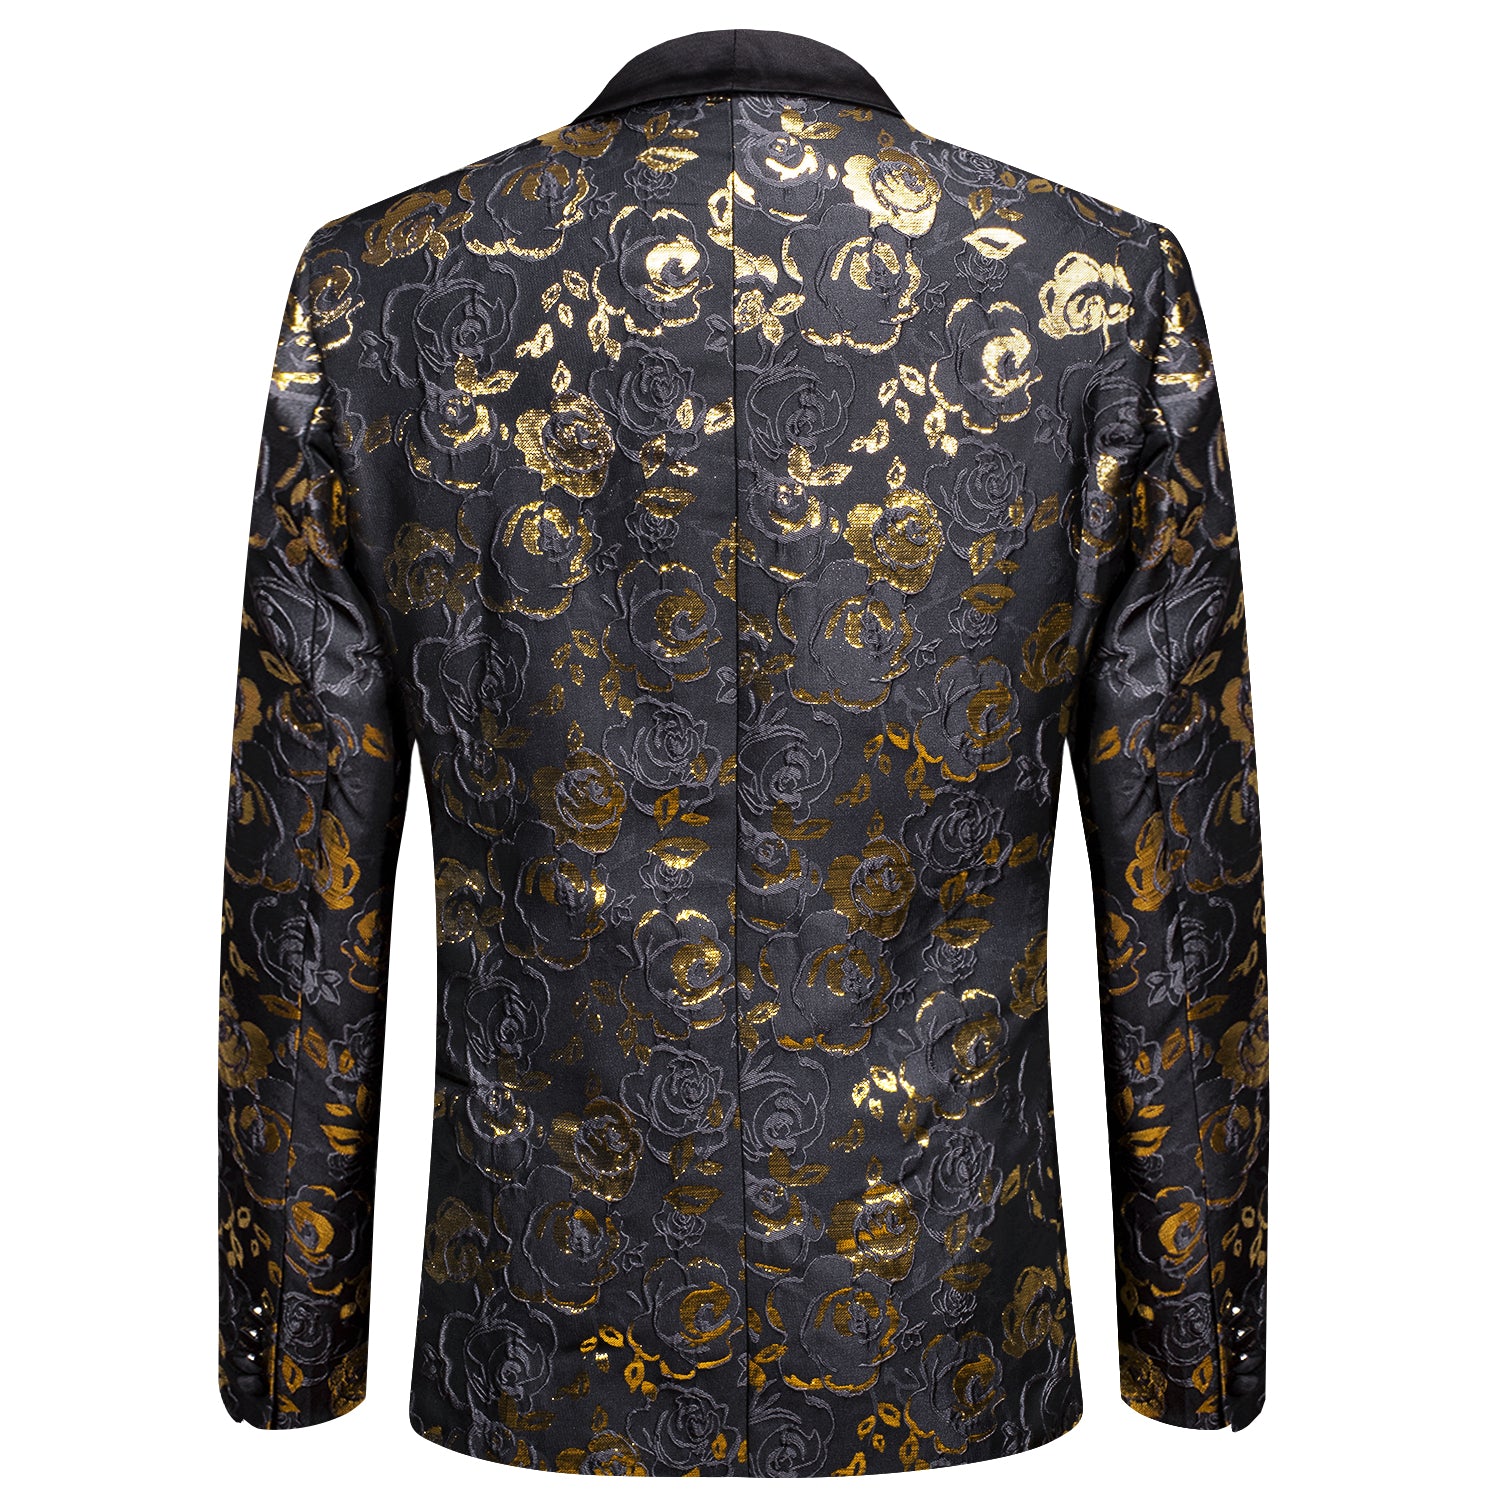 Hi-Tie Luxury Black Golden Floral Men's Suit Set